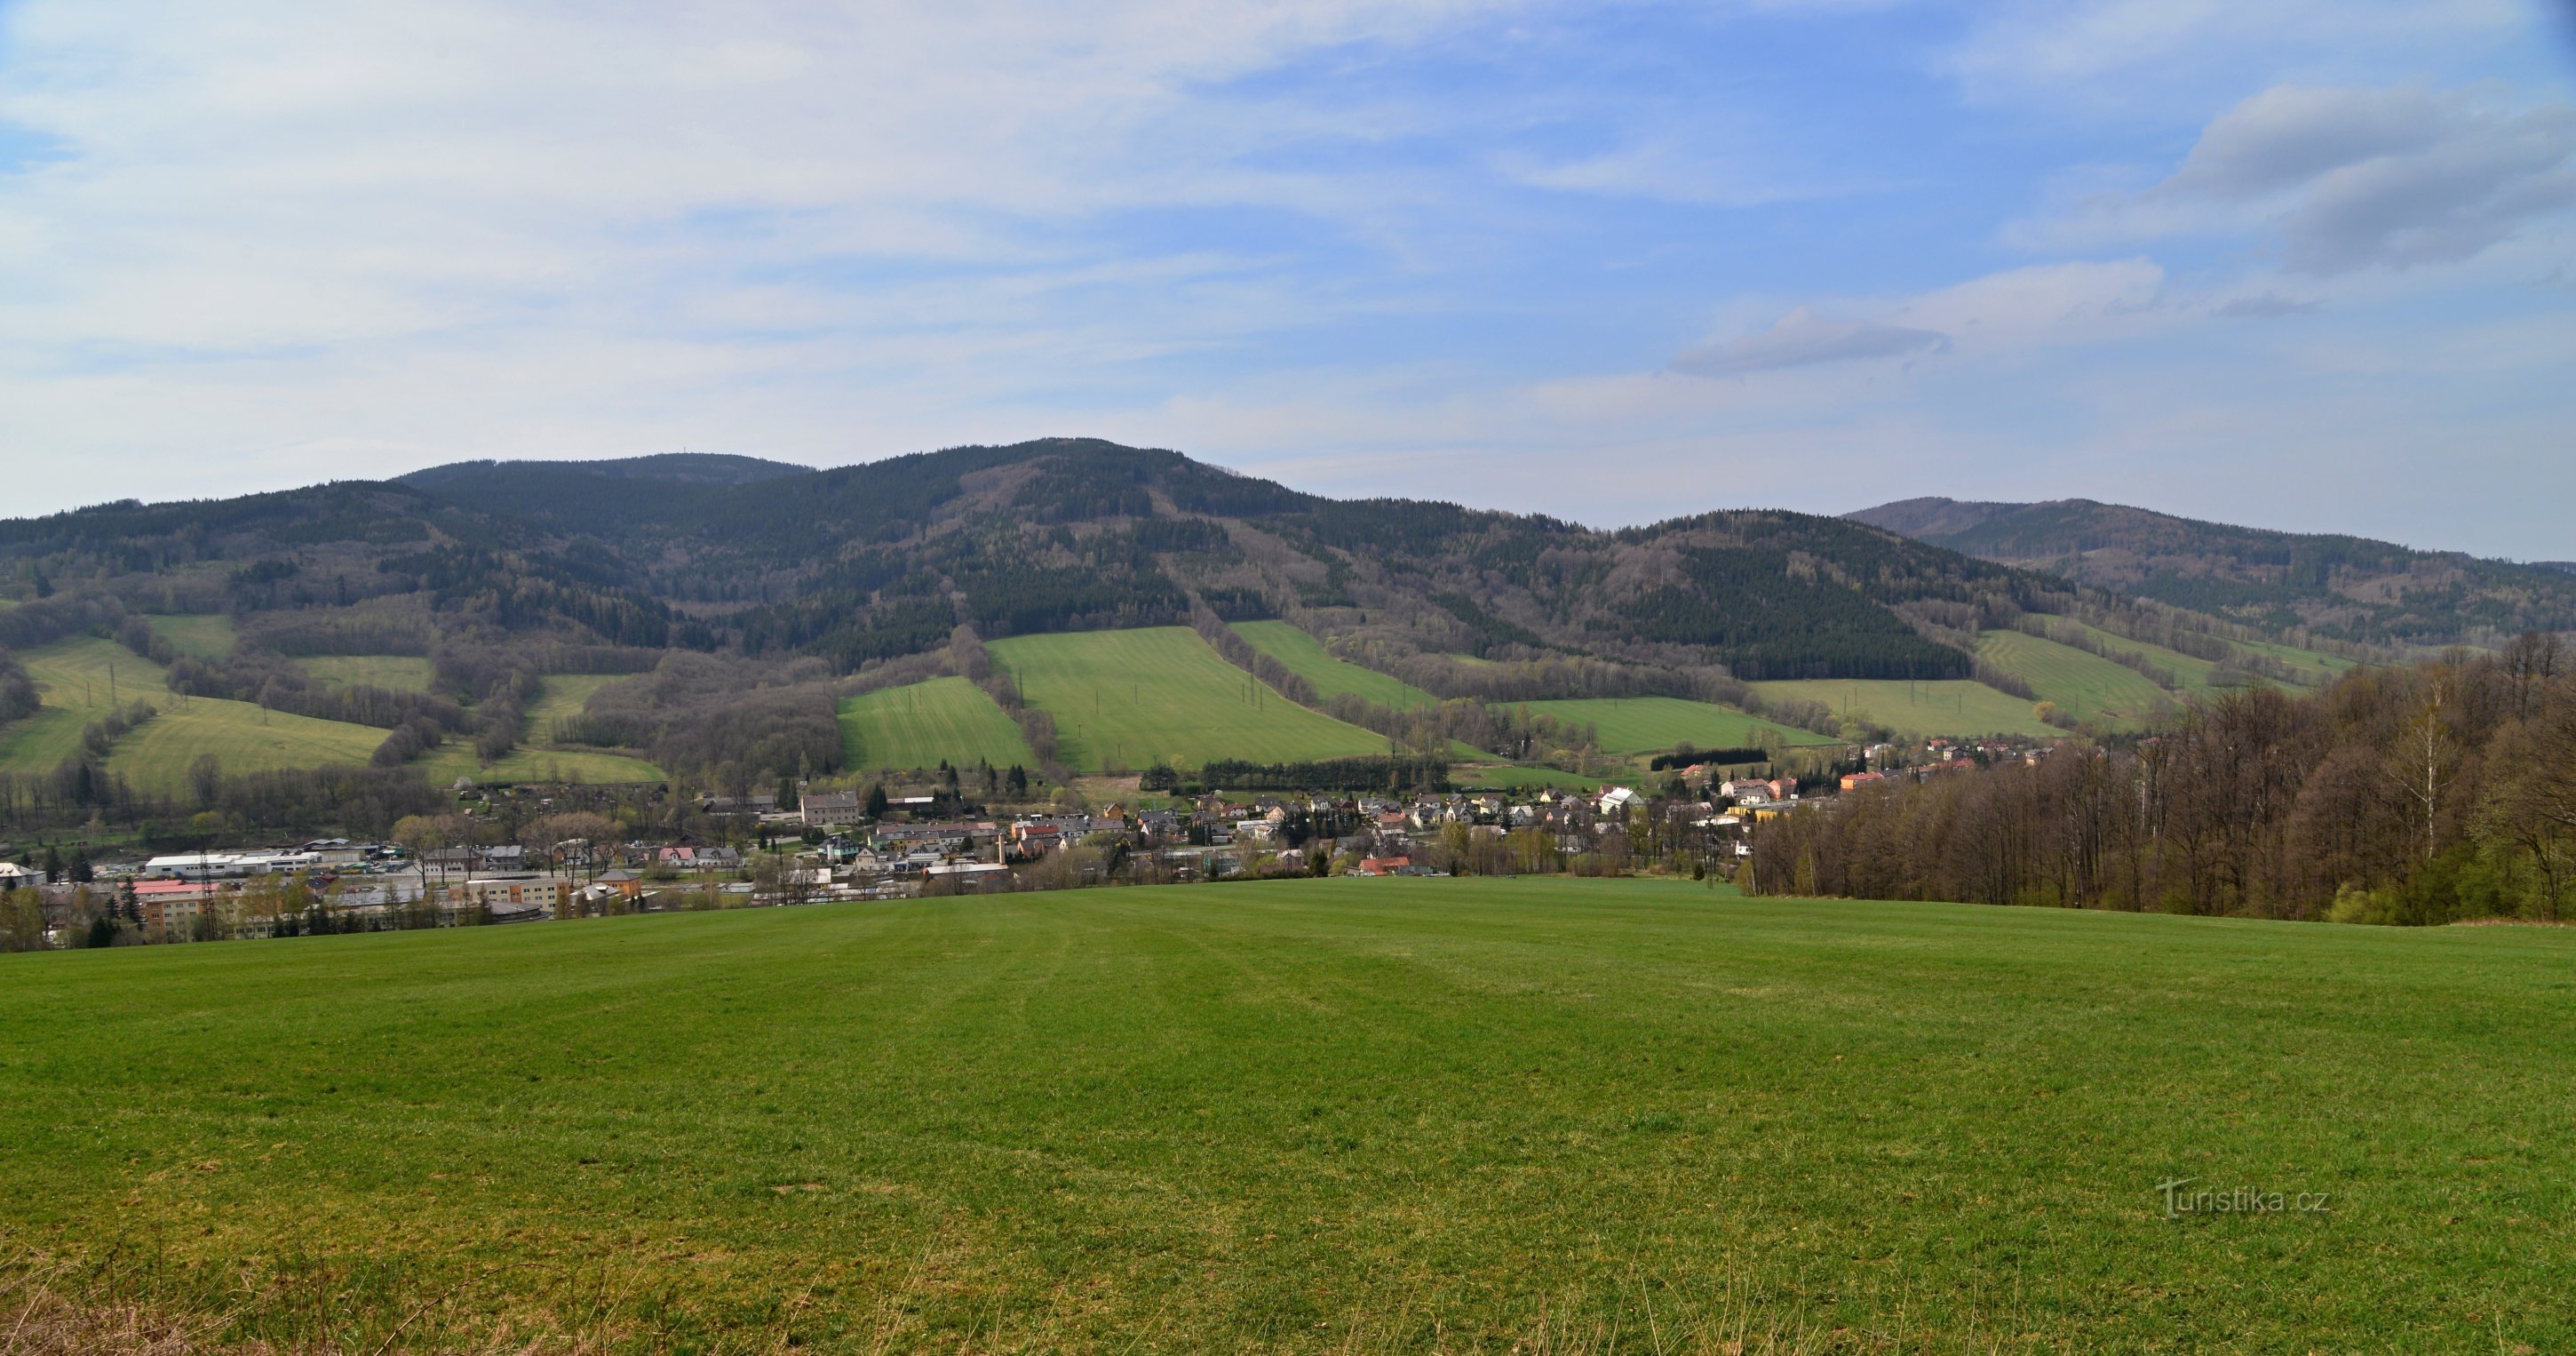 Dãy núi Rychleb: Sokolský hřbet trên Česká Vsí